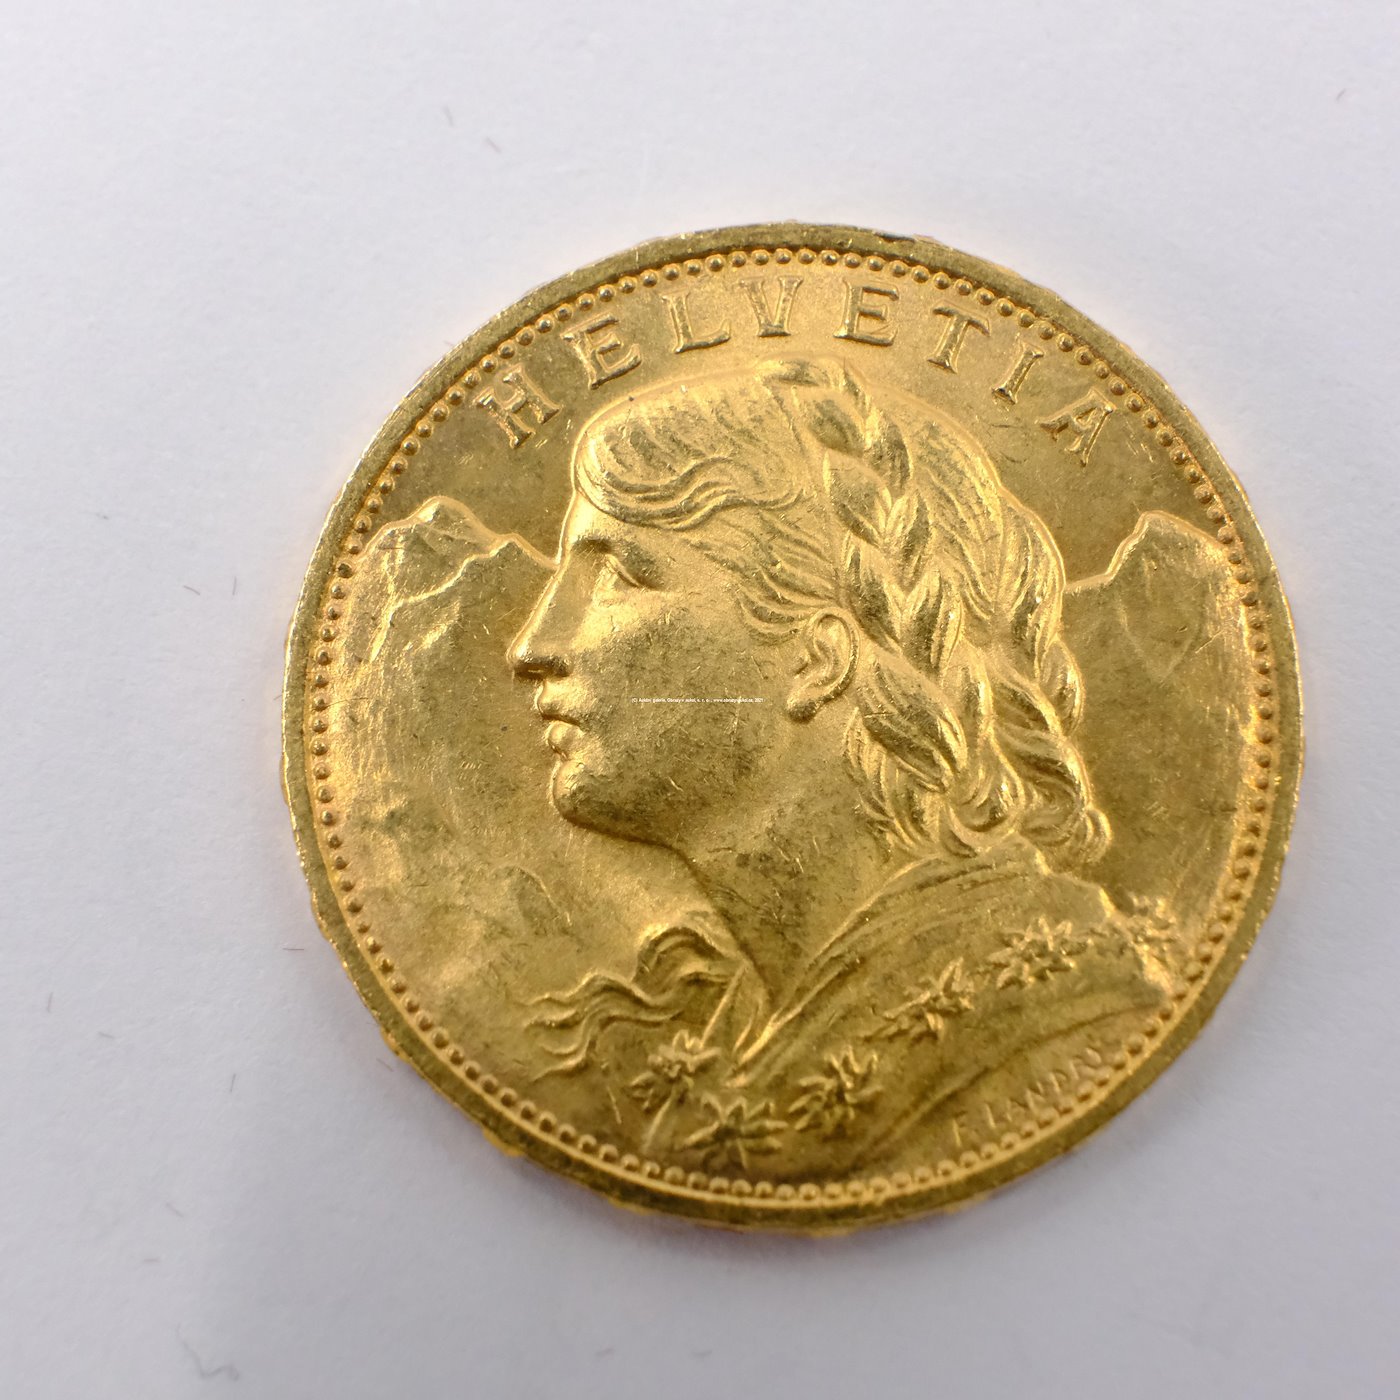 .. - Švýcarsko zlatý 20 frank VRENELI 1925. Zlato 900/1000, hrubá hmotnost 6,5g